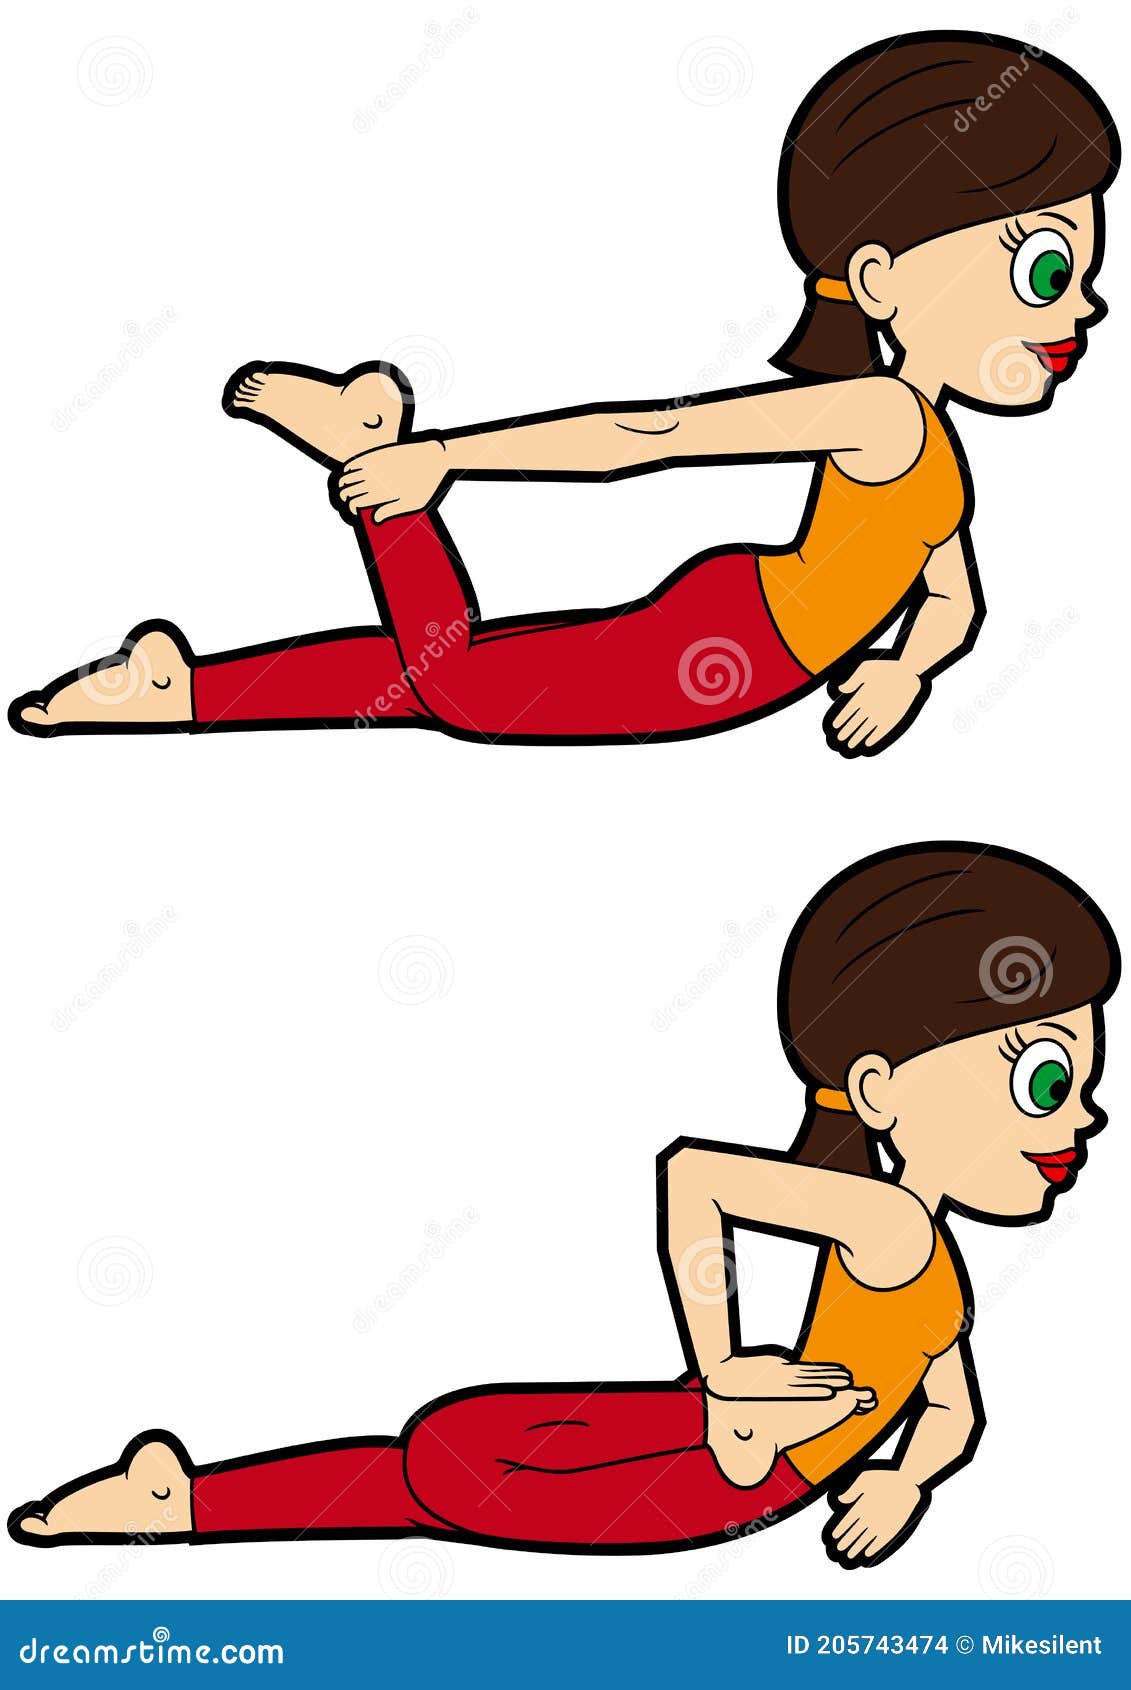 Know your yoga pose: Ardha Bhekasana or half frog pose | TheHealthSite.com